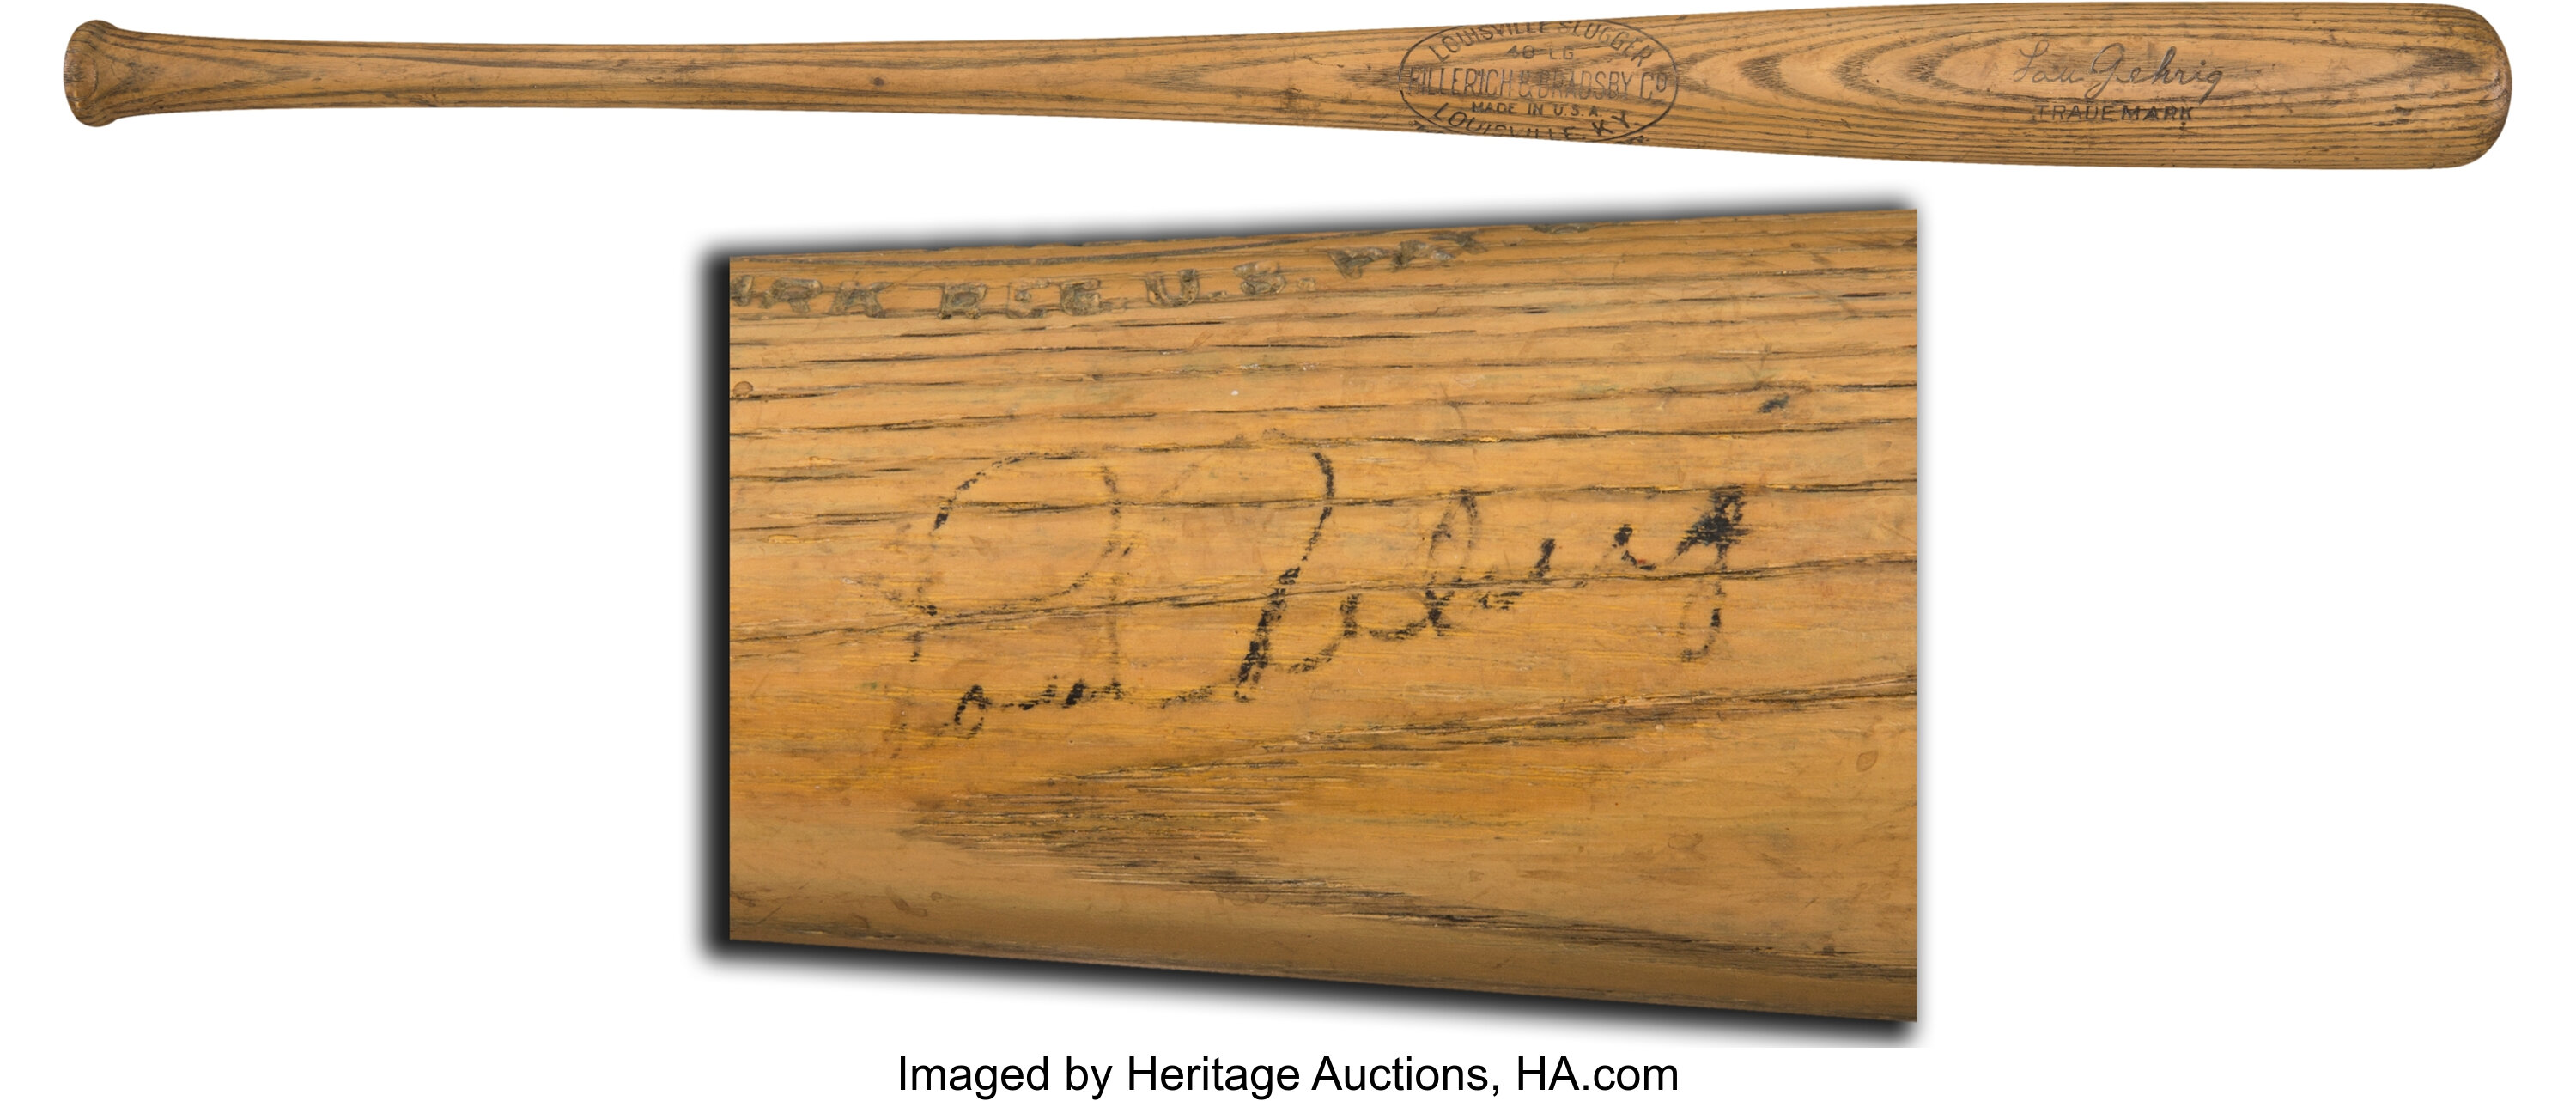 Sold at Auction: RARE Vintage 1930's Lou Gehrig Louisville Slugger